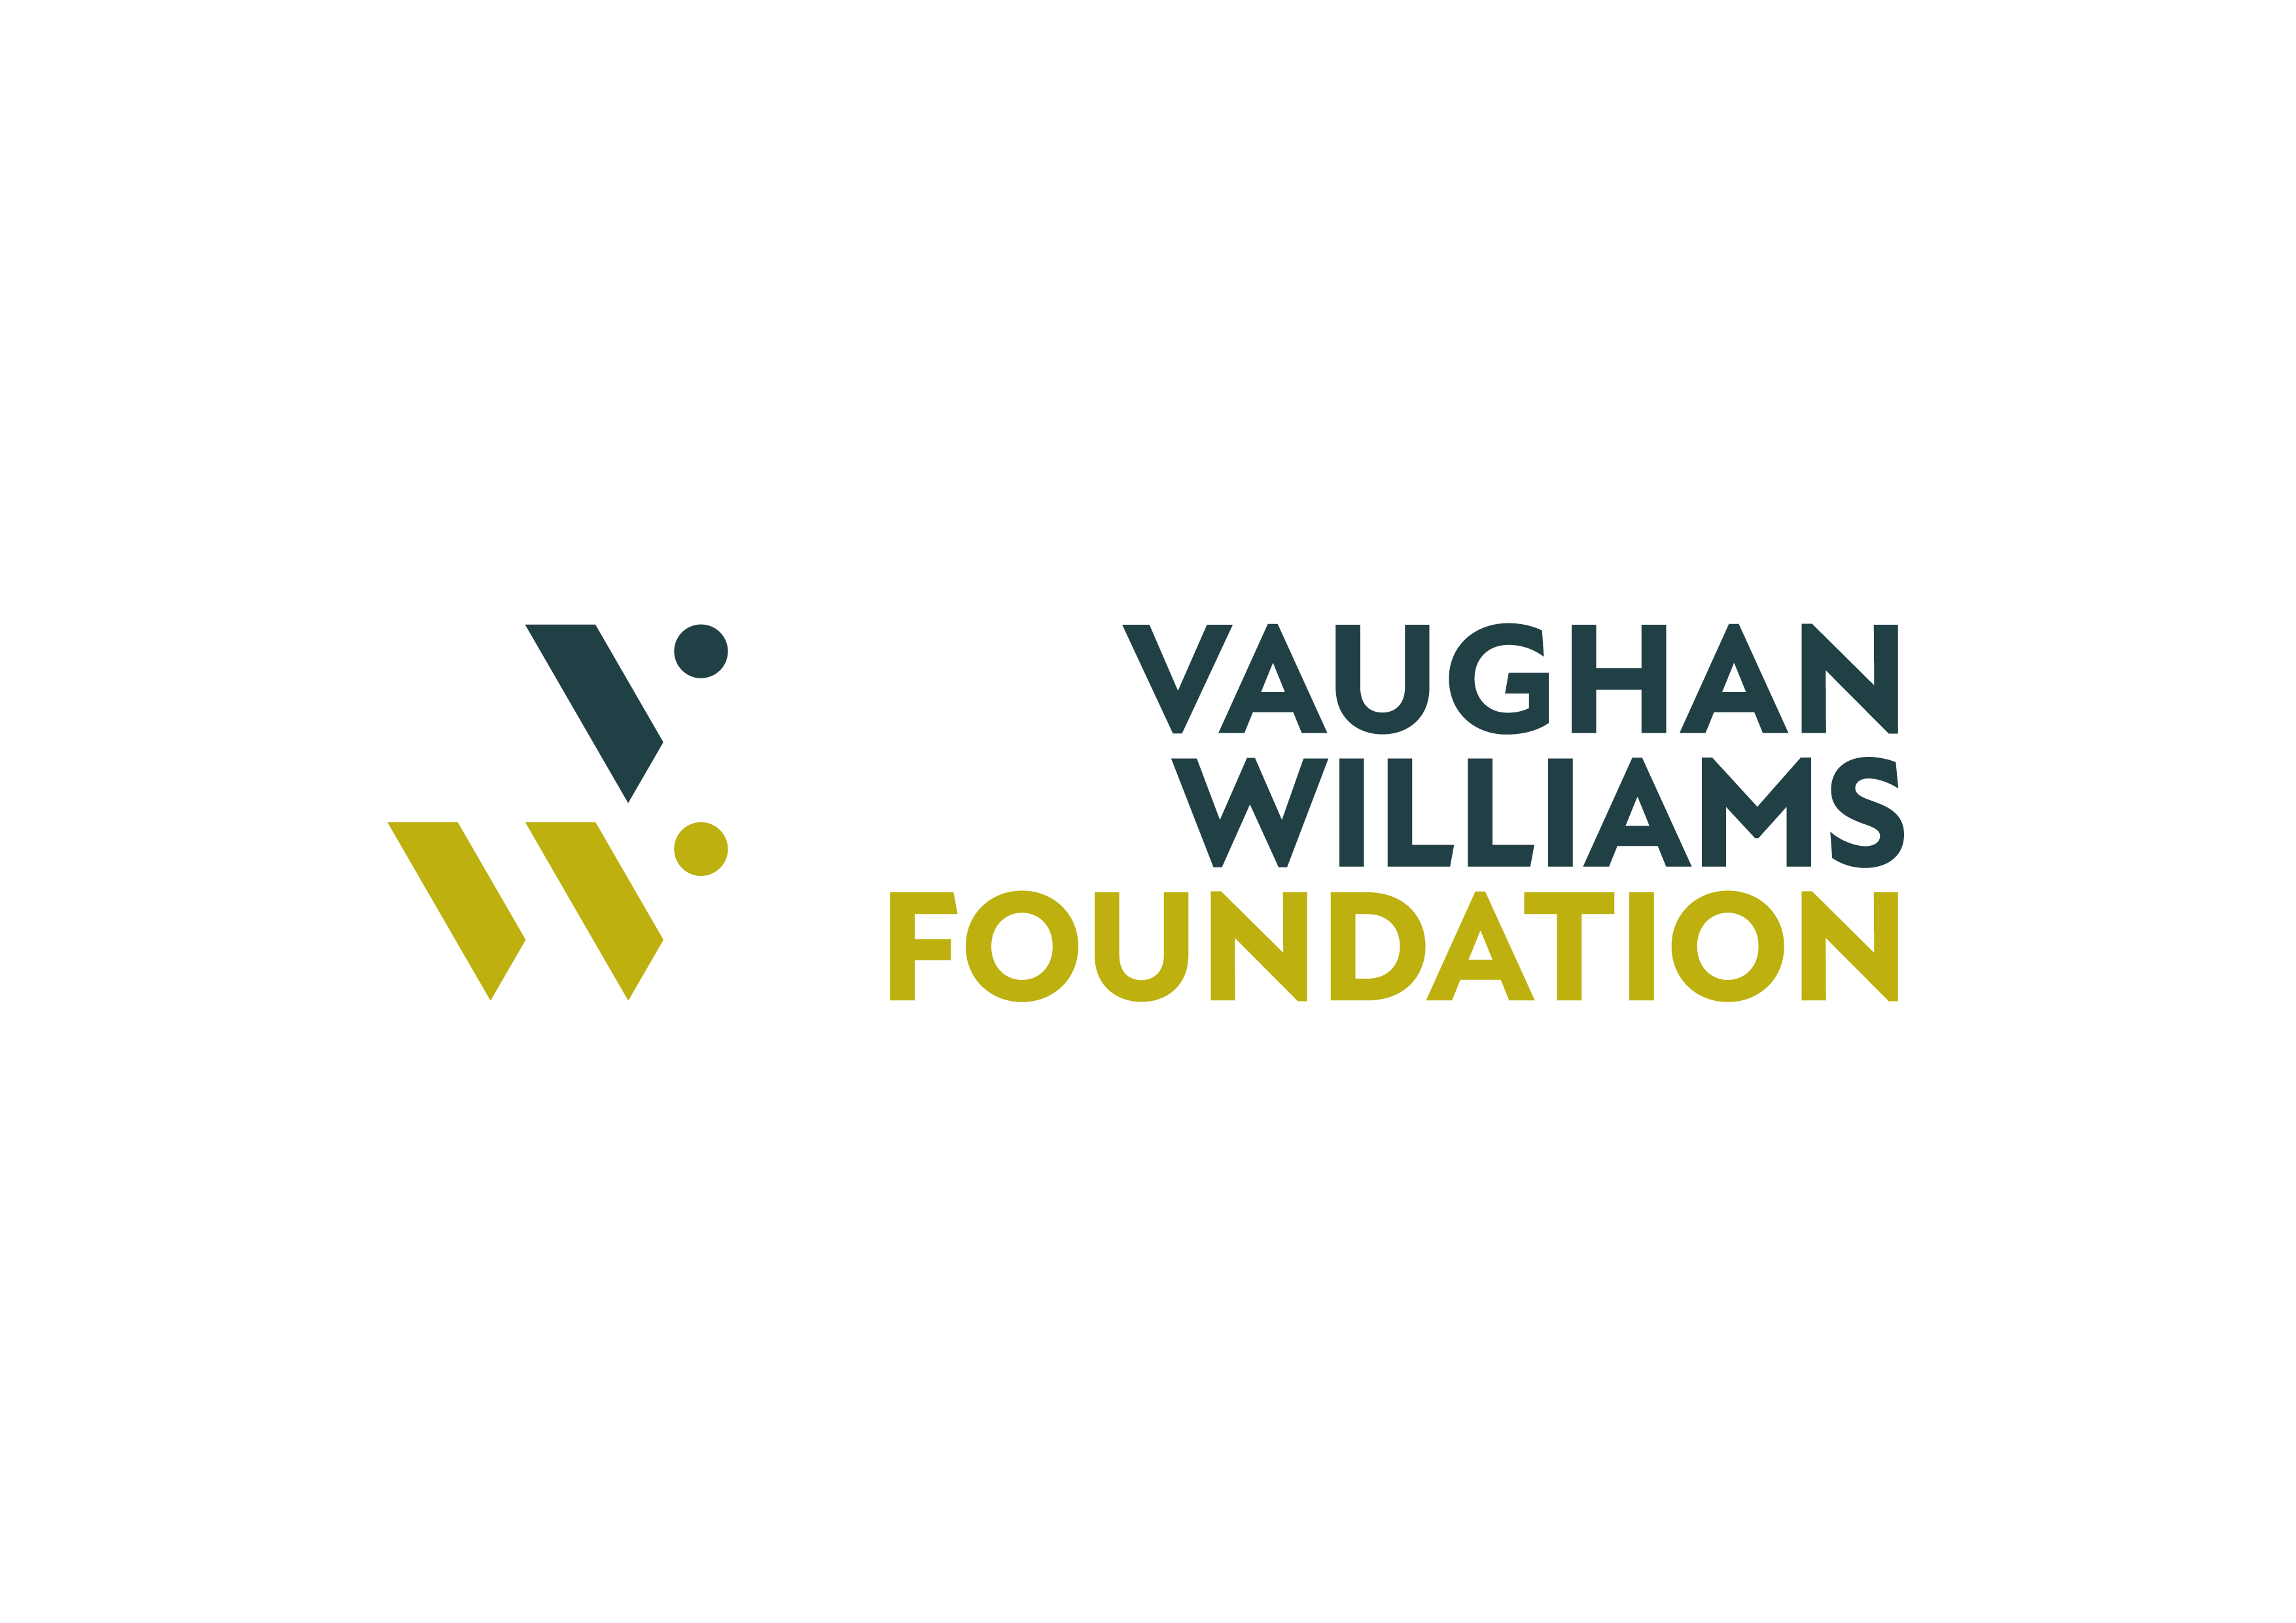 Vaughan Williams Foundation logo